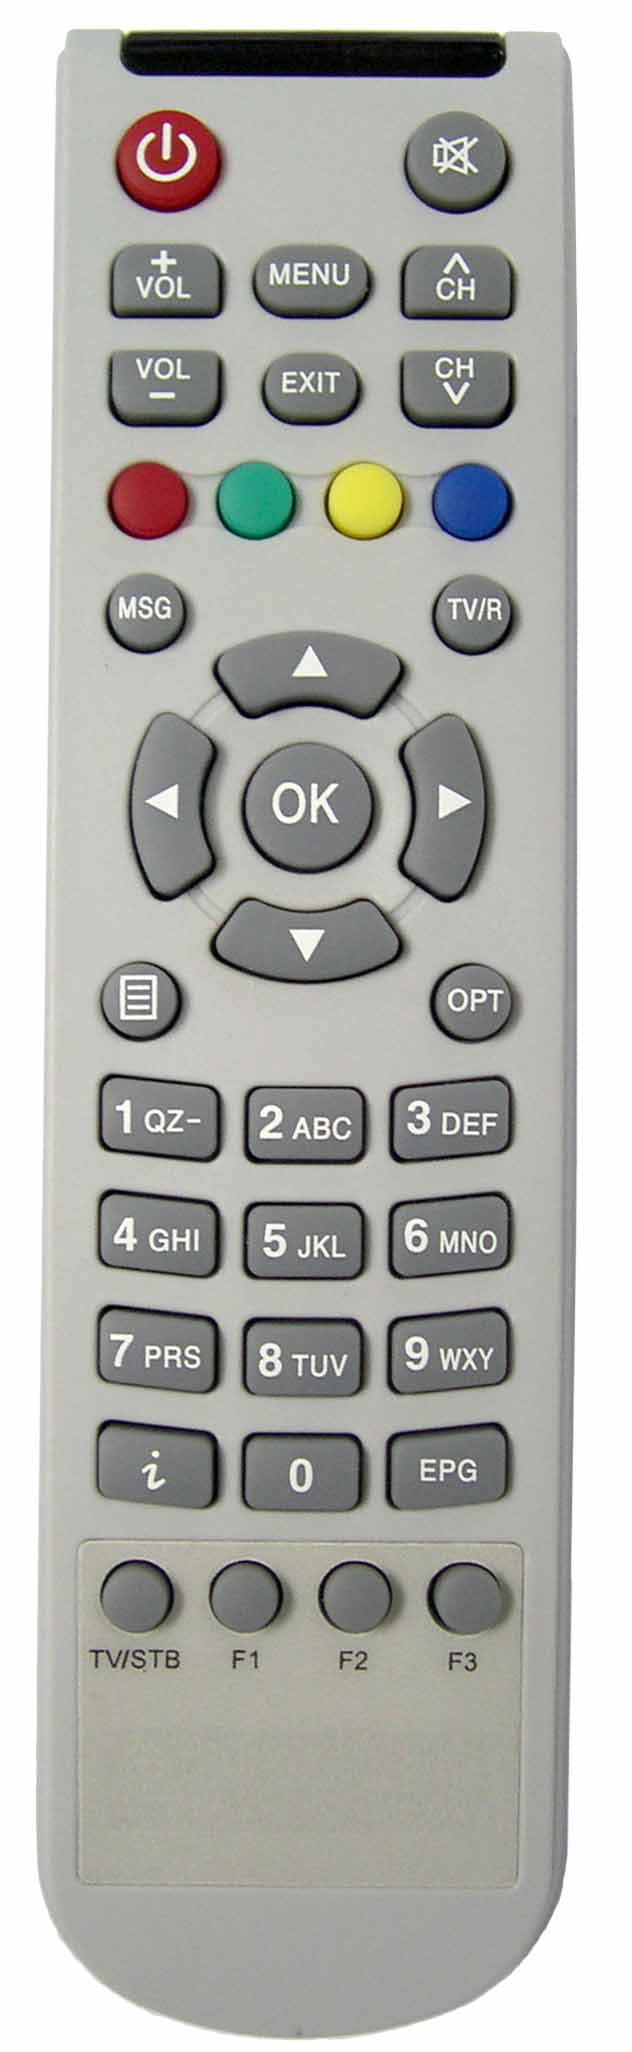 Digital TV Remote Control